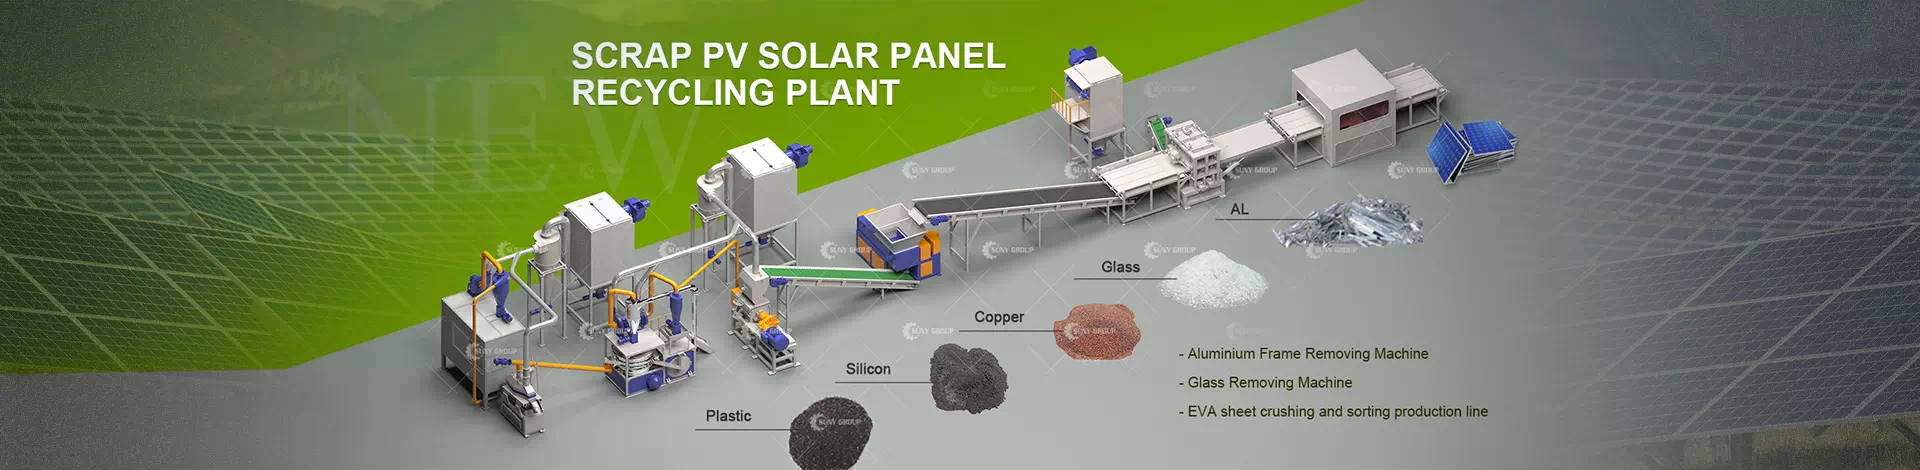 Solar Panel Recycling Equipment